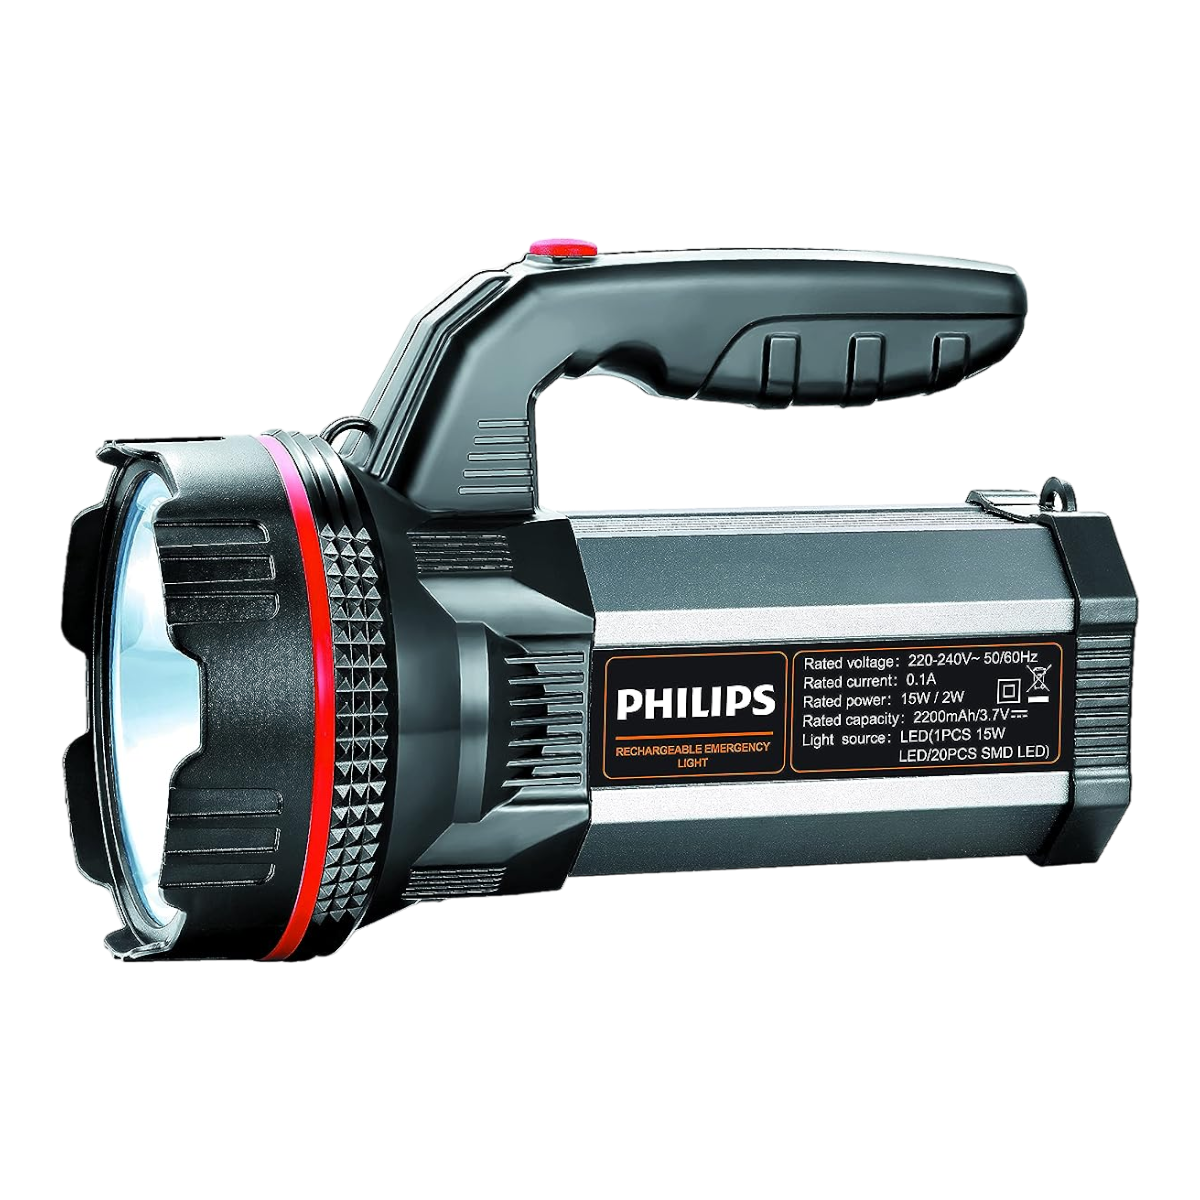 Philips Blaze Rechargeable Emergency light